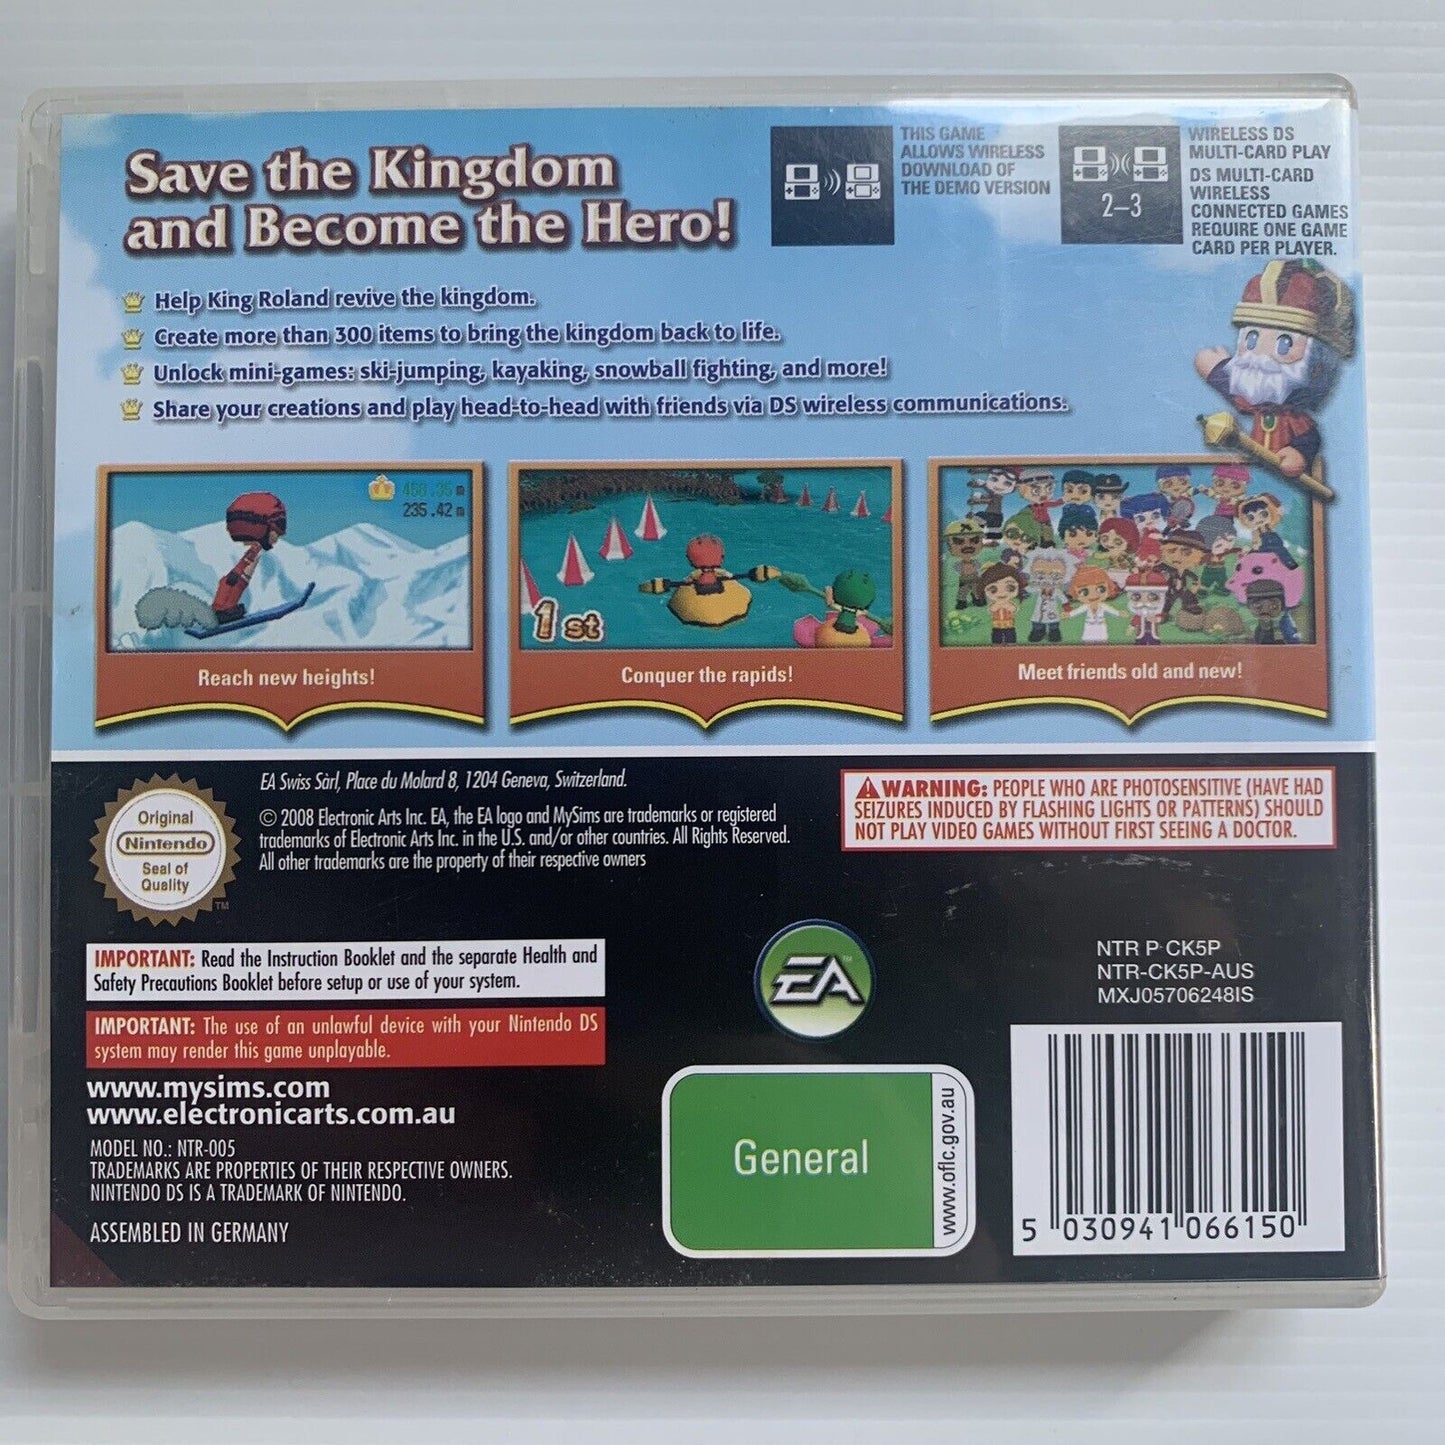 My Sims Kingdom Game Nintendo DS